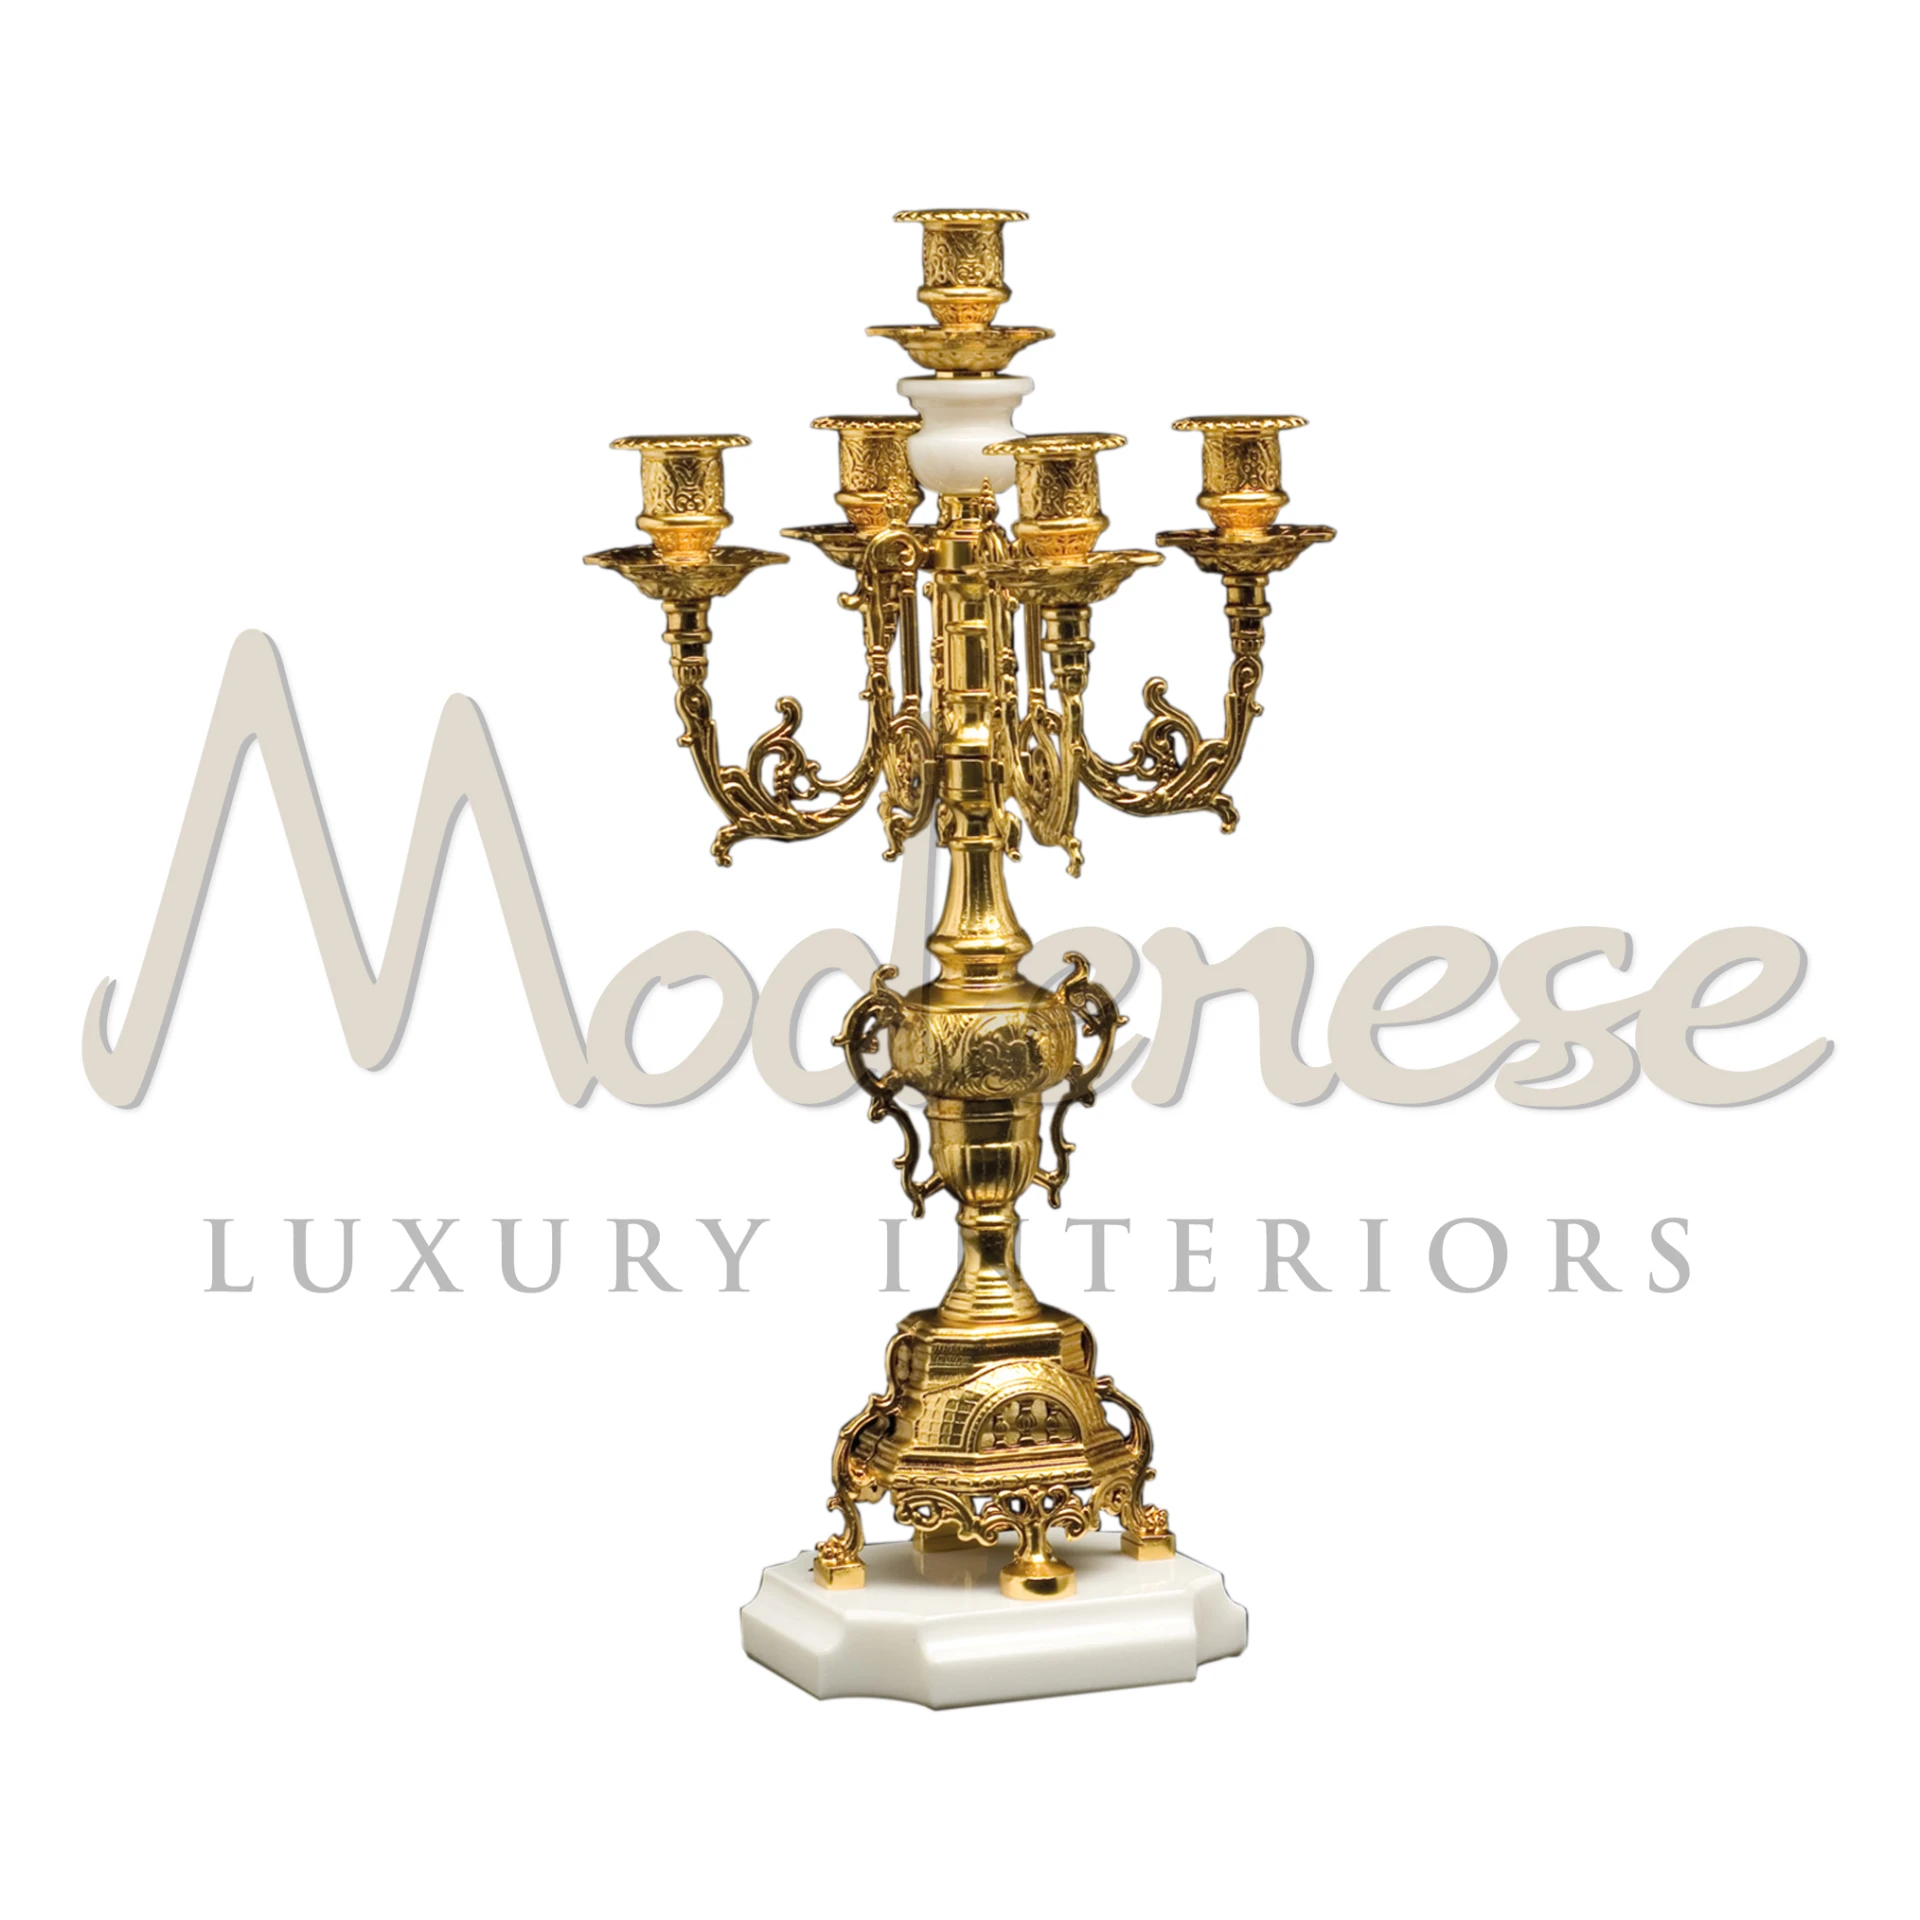 Luxury Italian Column Candelabra by Modenese with Elegant Gold Details
